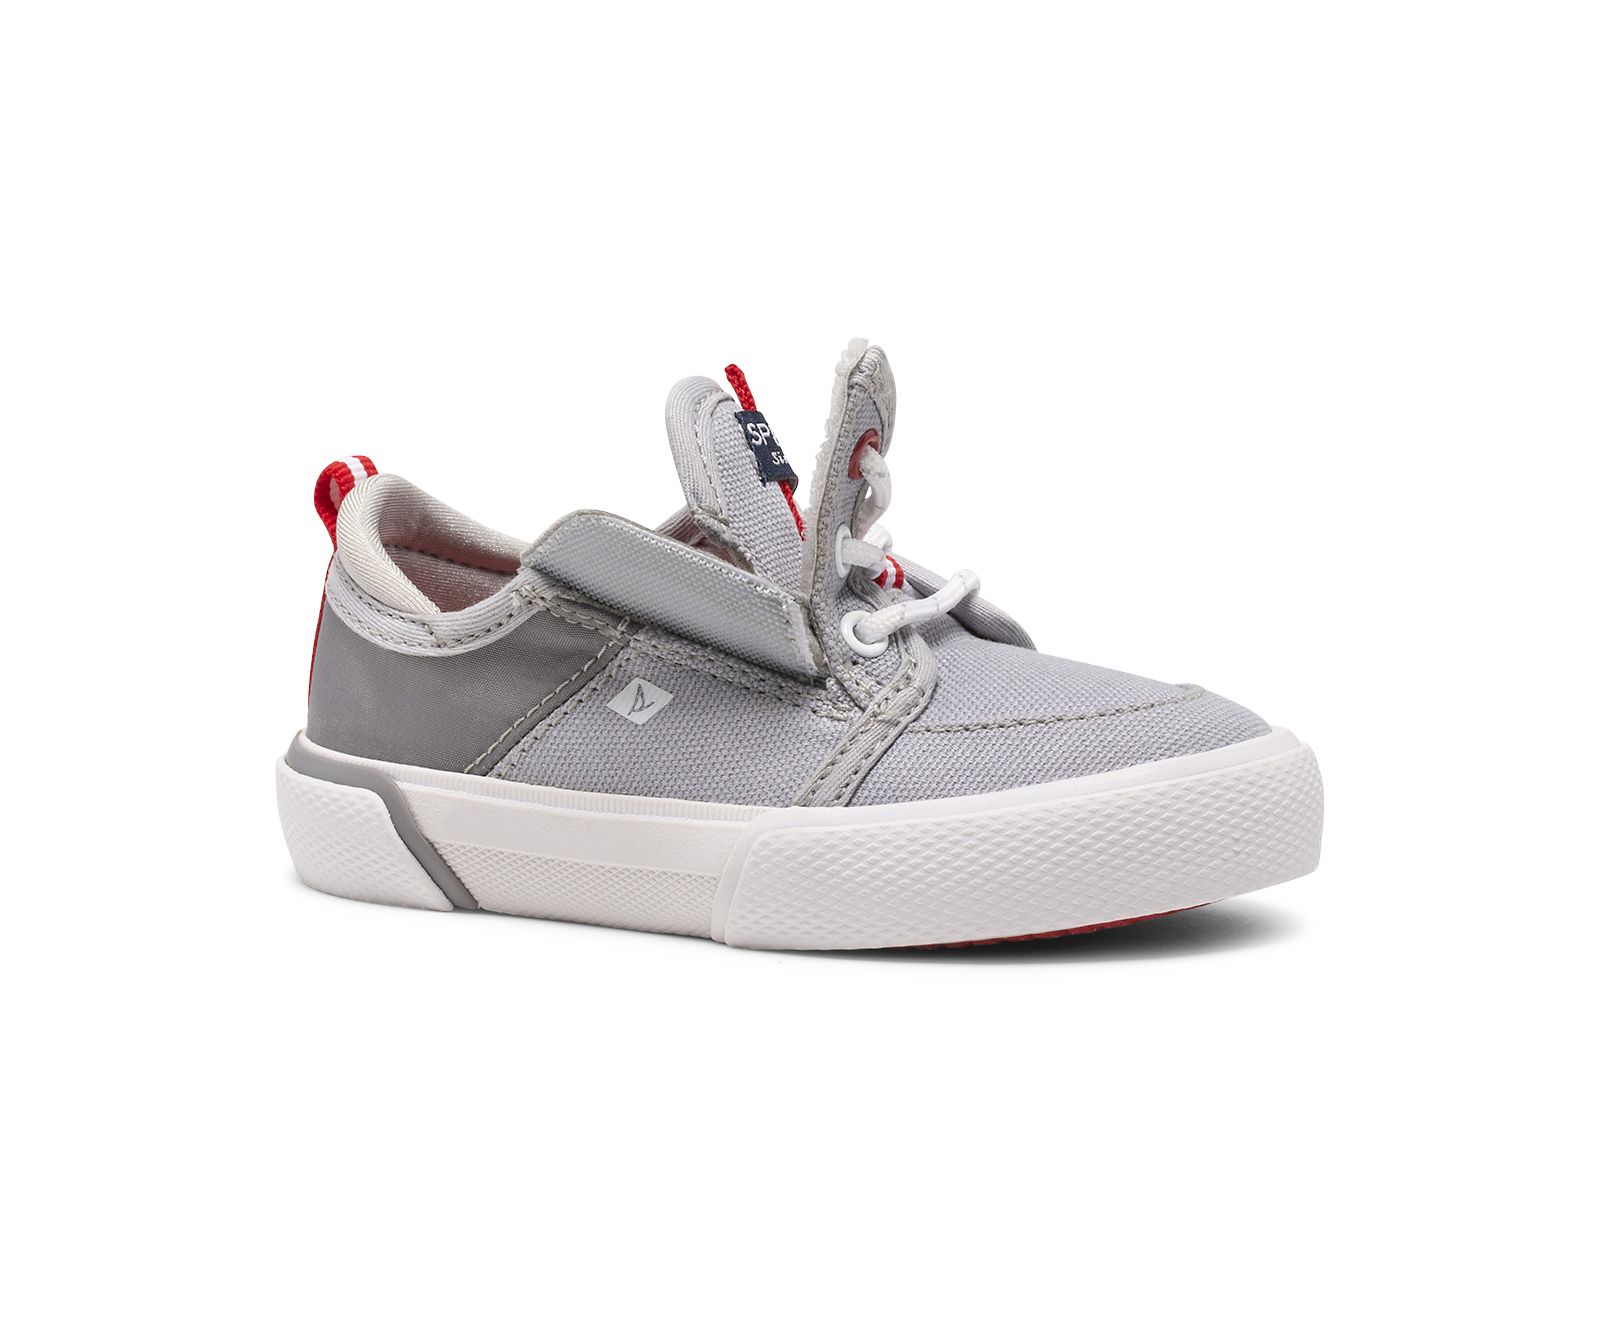 Little Kid's Soletide Junior Sneaker - Grey